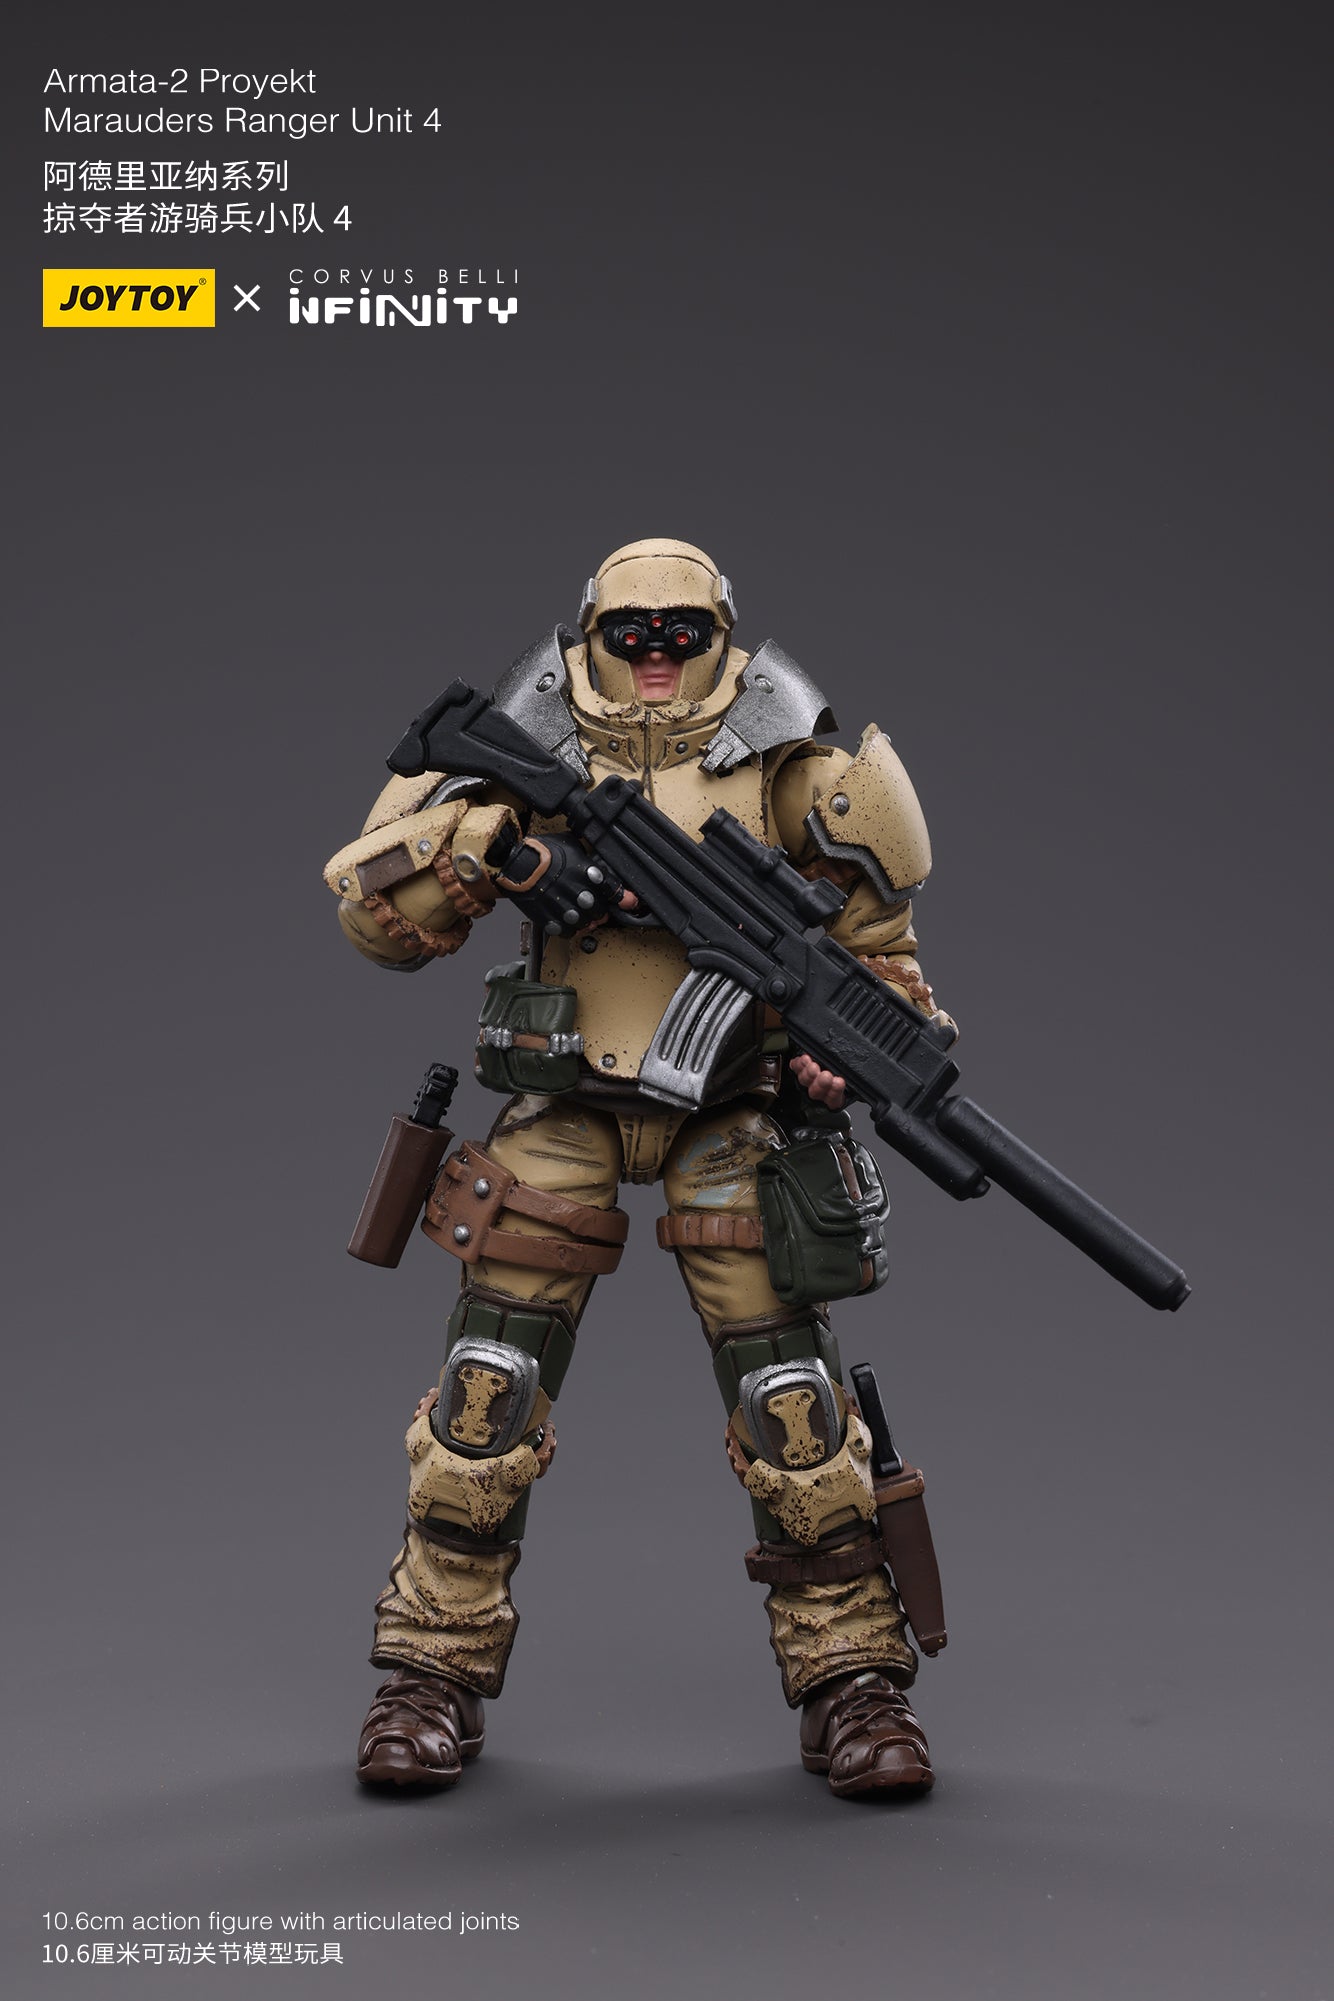 Armata-2 Proyekt Marauders Ranger Unit 4- Action Figure By JOYTOY